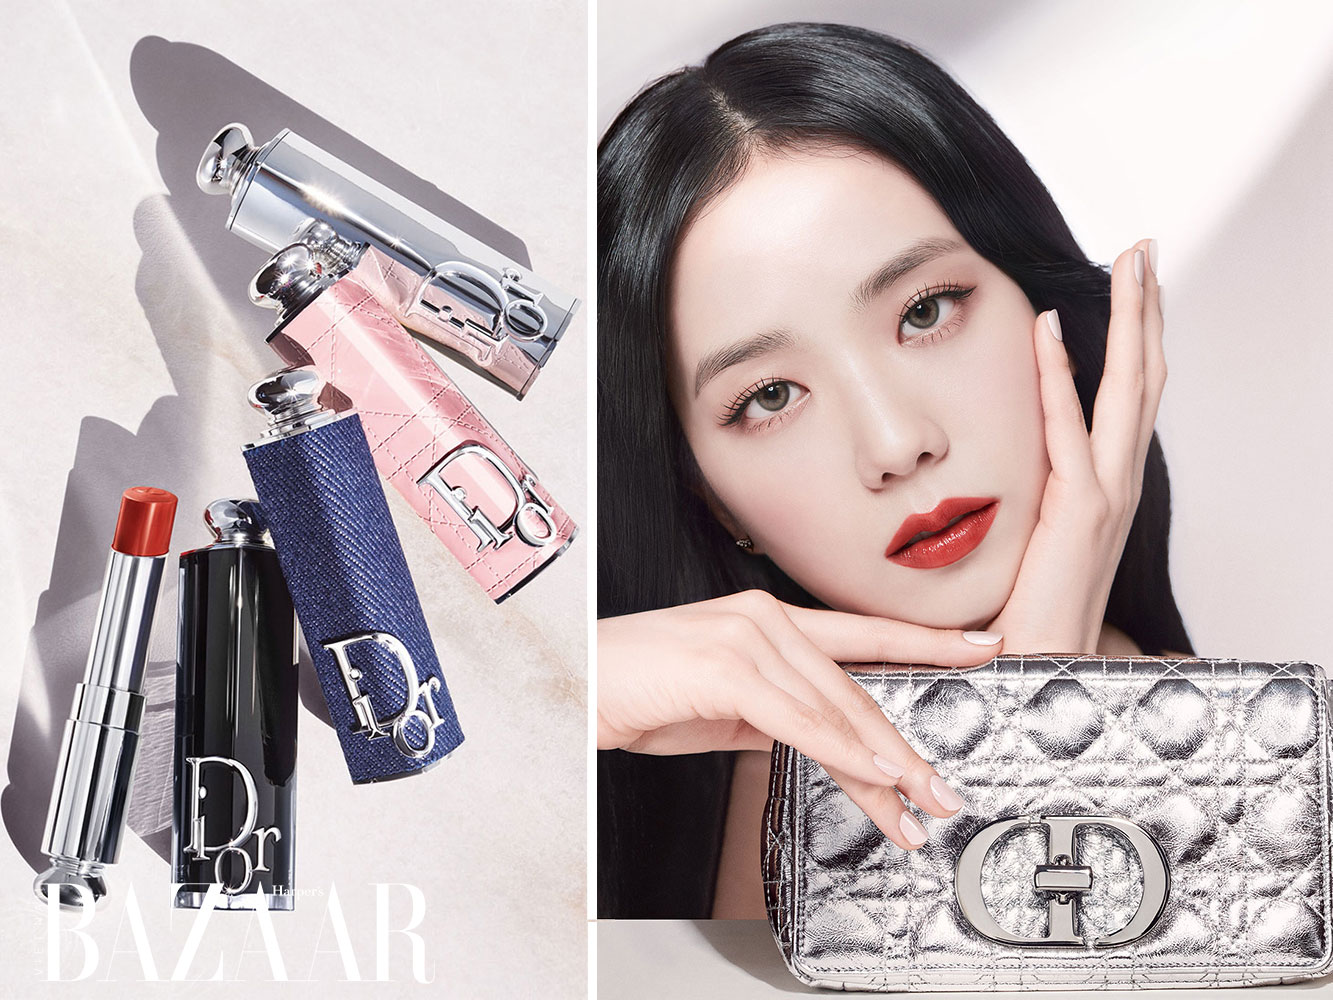 Son dưỡng môi Dior Addict Lip maximizer Mẫu mới nhất MinisizeFullsize  009020018039  Shopee Việt Nam